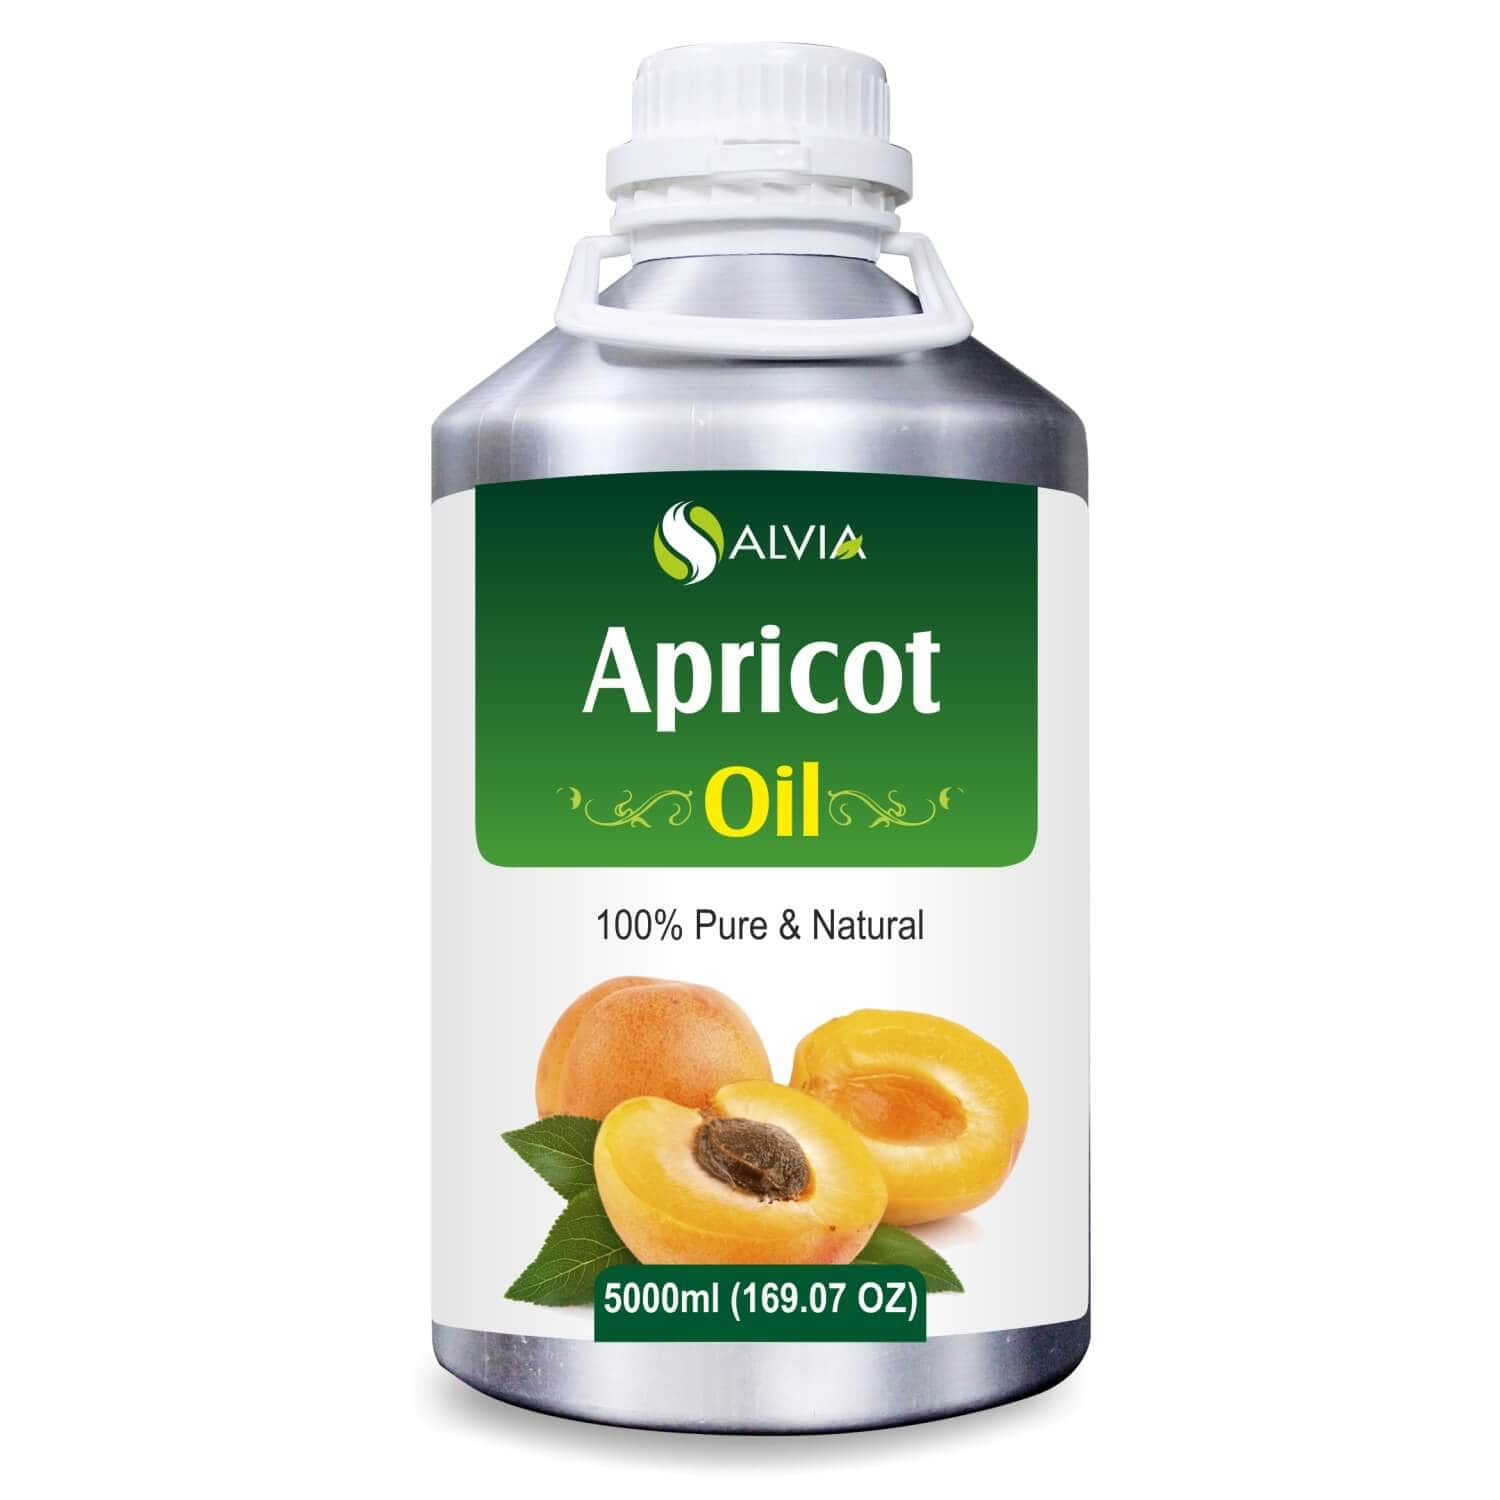 Salvia Natural Carrier Oils 5000ml Apricot Oil (Prunus armeniaca) 100% Natural Pure Carrier Oil